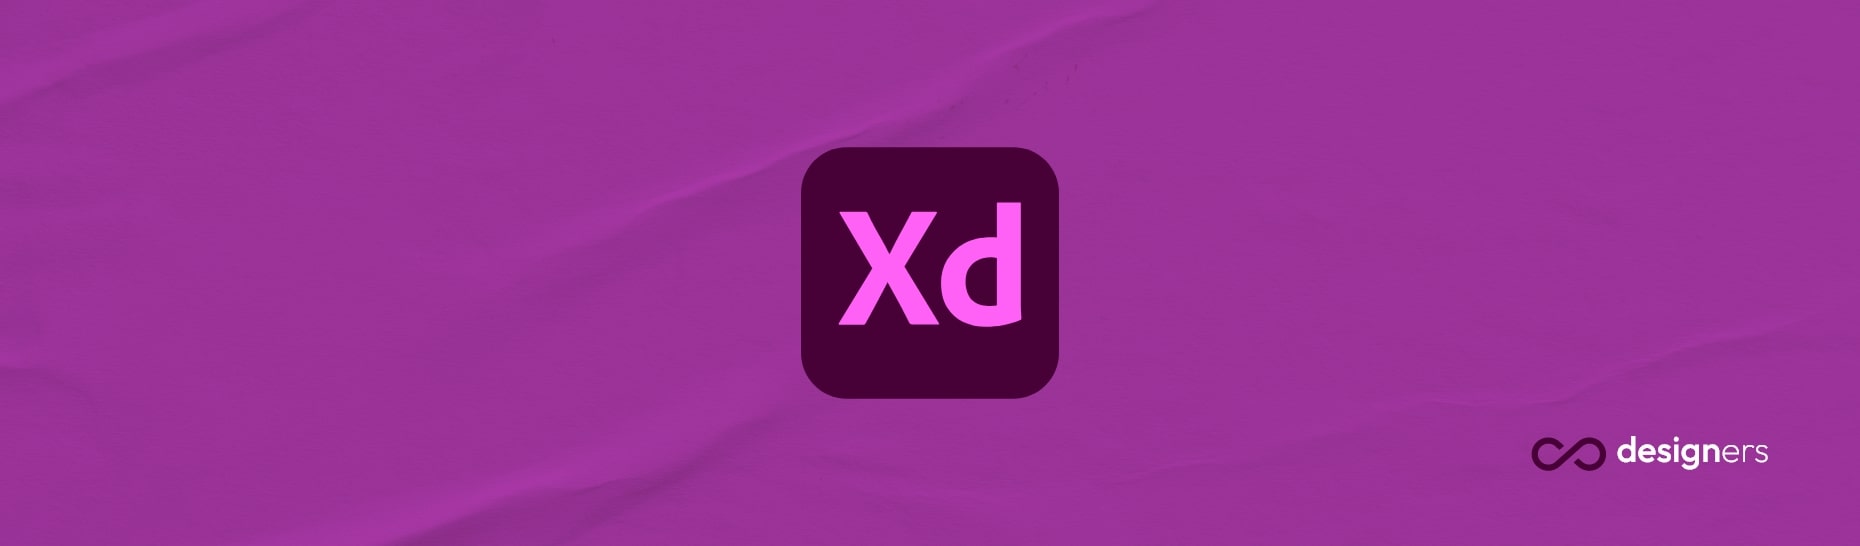 Do UI designers use Adobe XD?